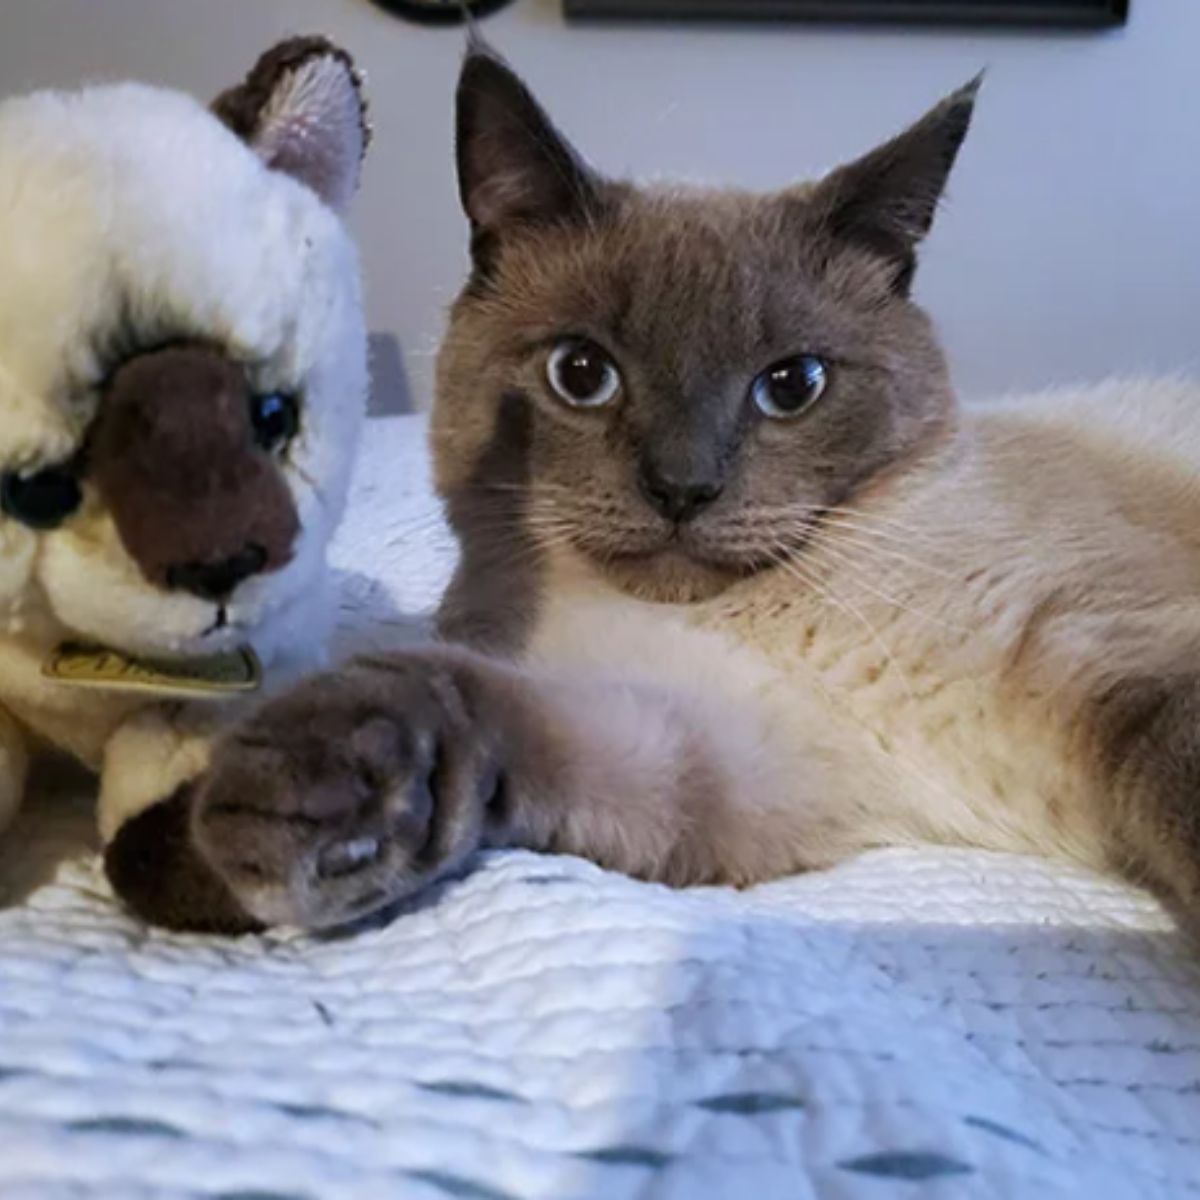 cat and stuffed animal